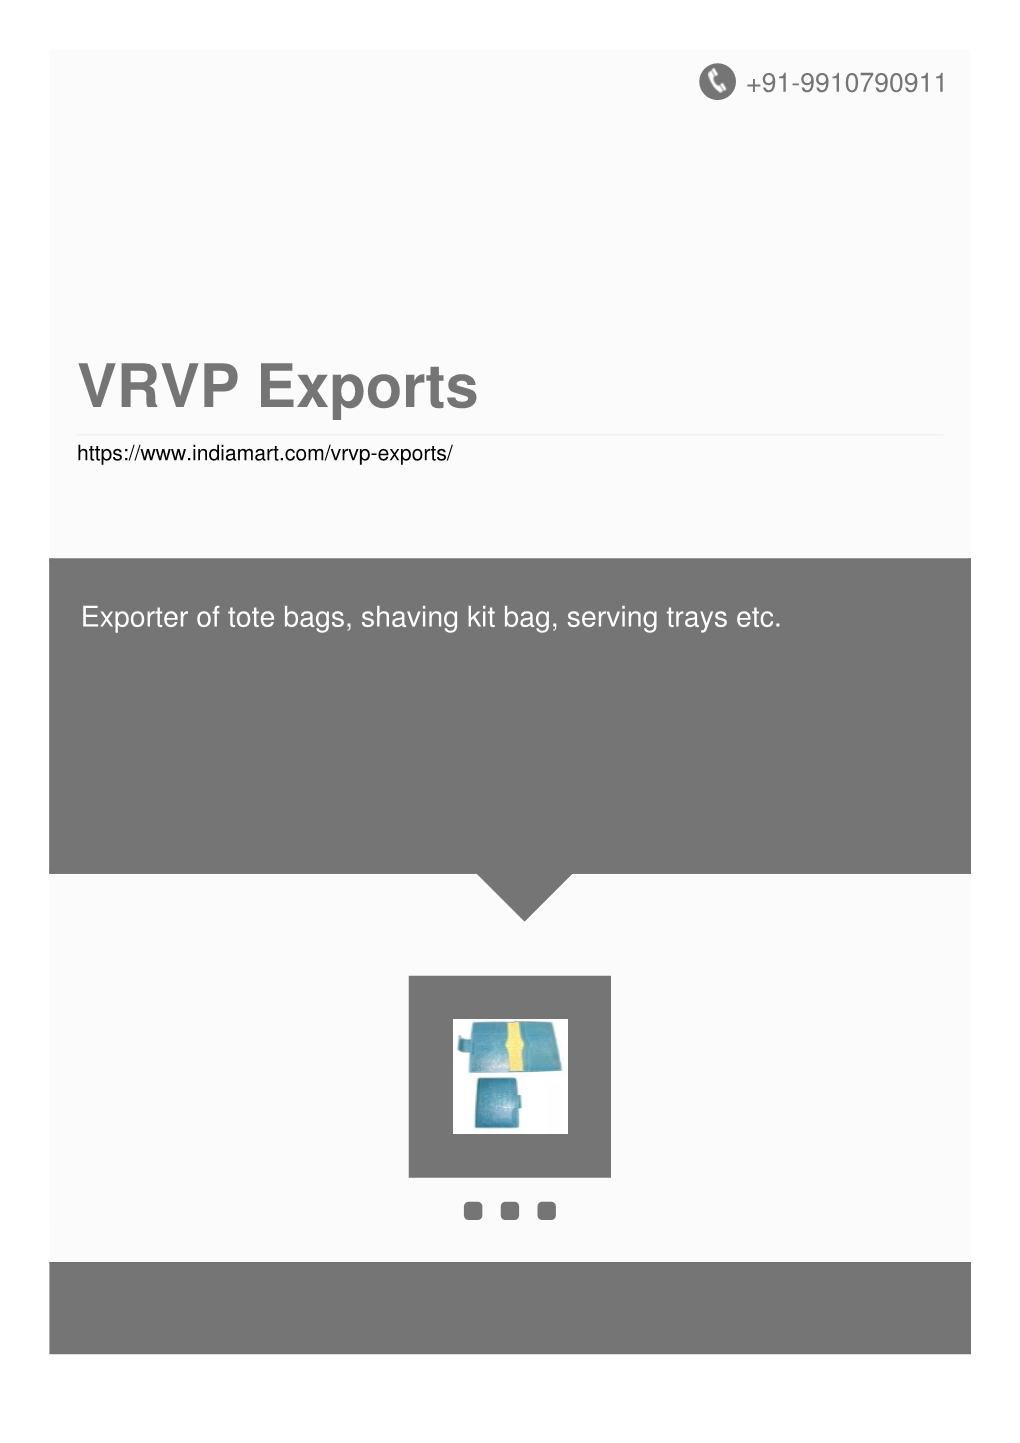 VRVP Exports